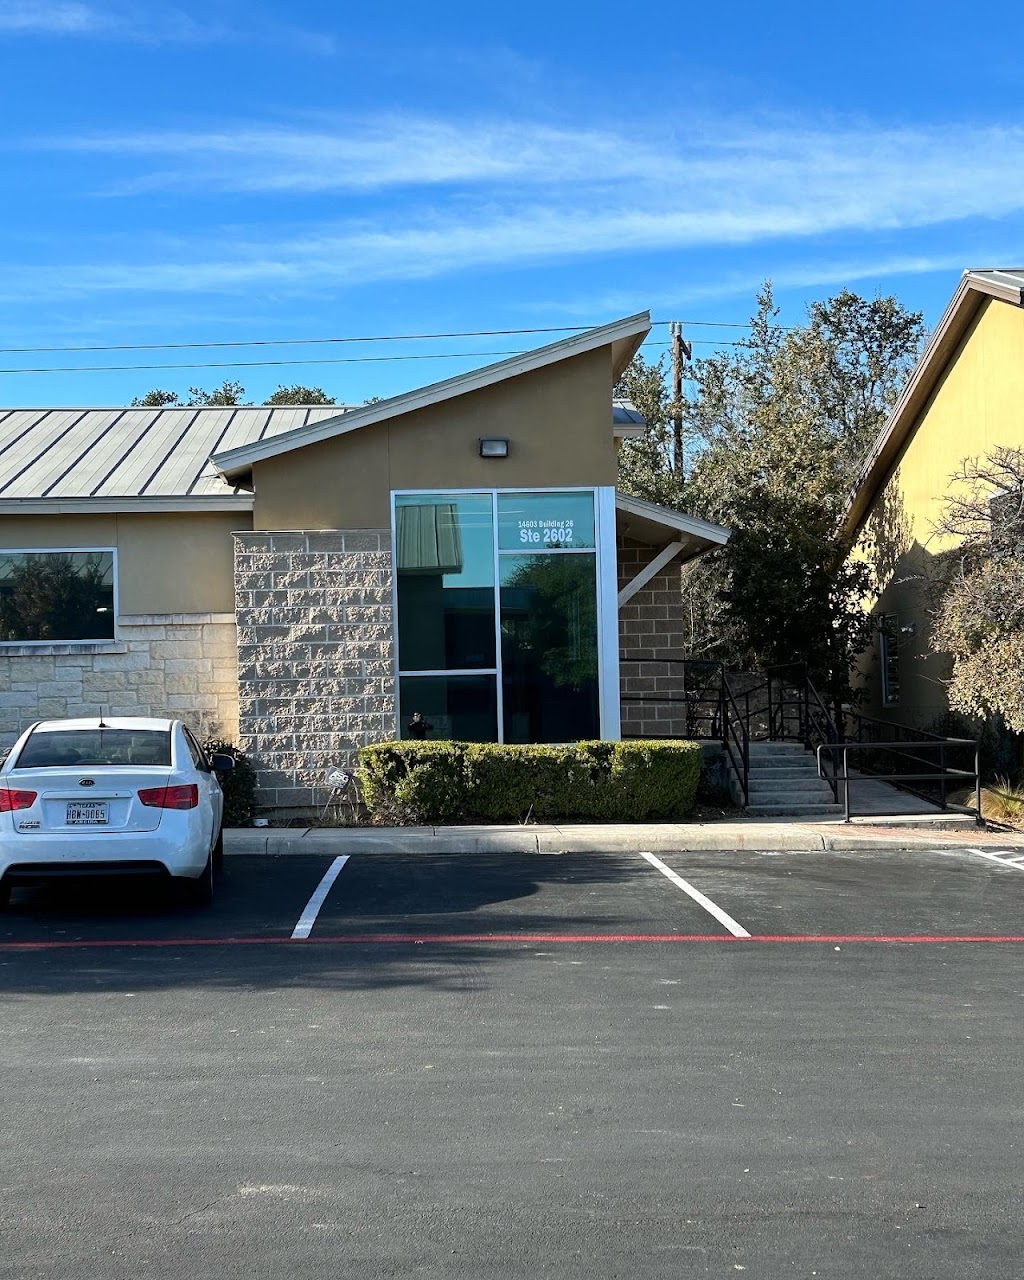 Swan Wellness Center Acupuncture Clinic | 14603 Huebner Rd Ste. 2602, San Antonio, TX 78230 | Phone: (210) 888-1436